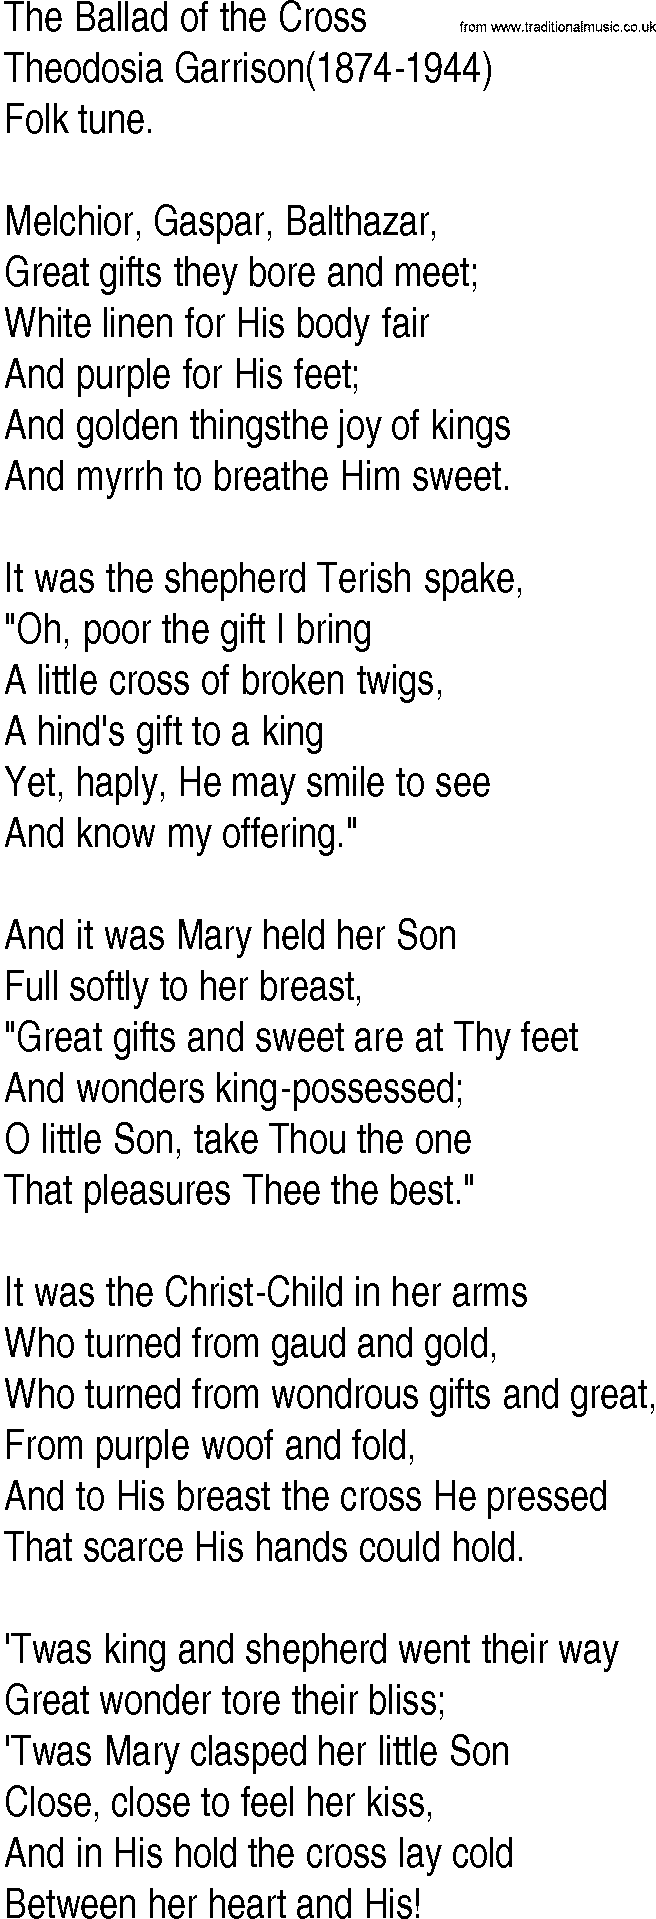 Hymn and Gospel Song: The Ballad of the Cross by Theodosia Garrison lyrics